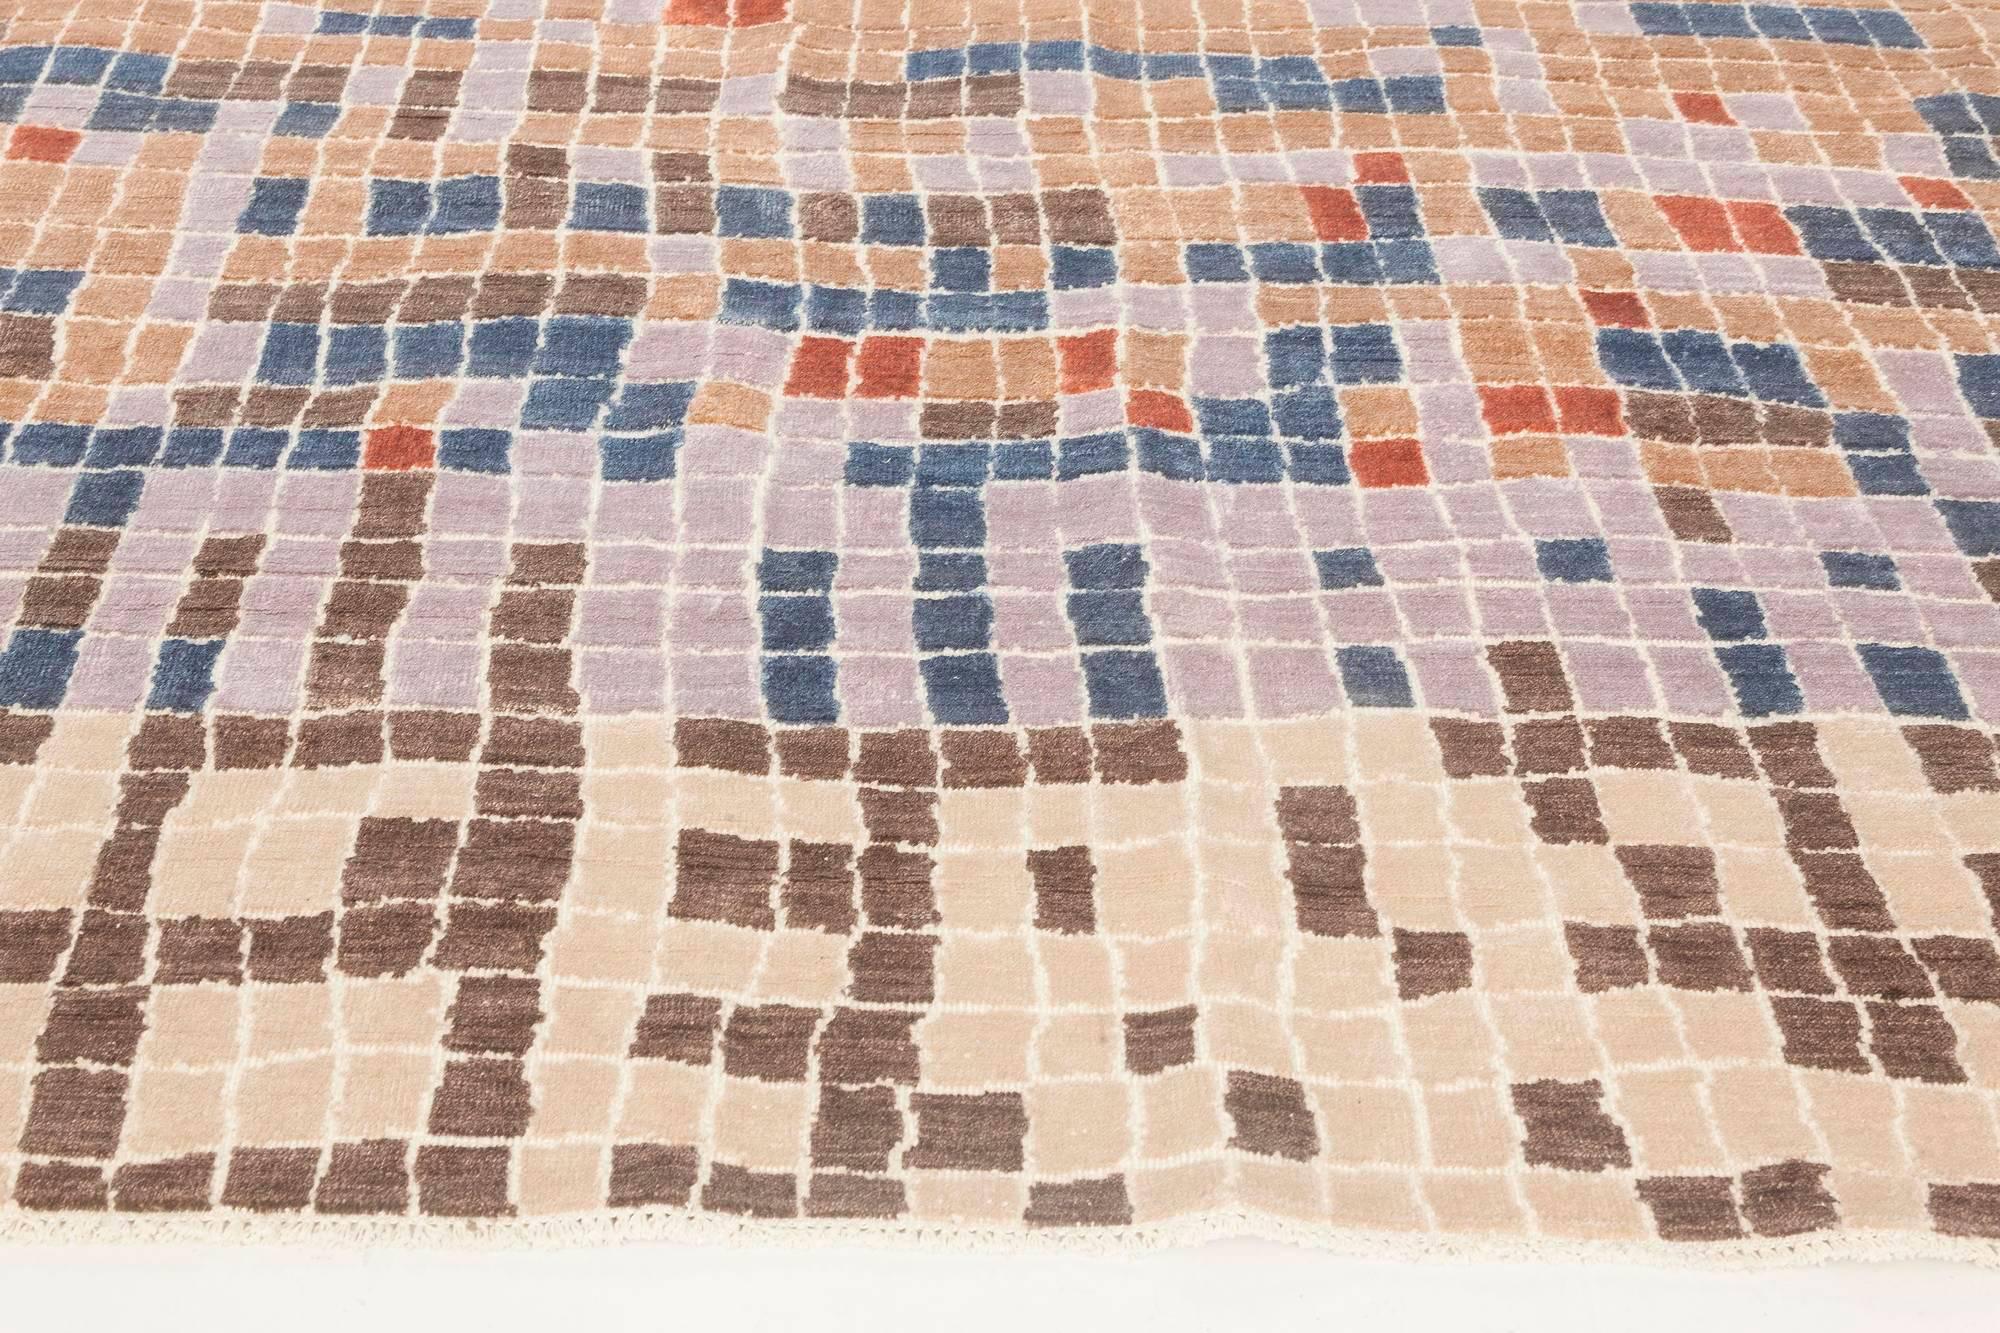 Contemporary Modern Multi-Color POOL Tile Geometric Design Rug by Doris Leslie Blau For Sale